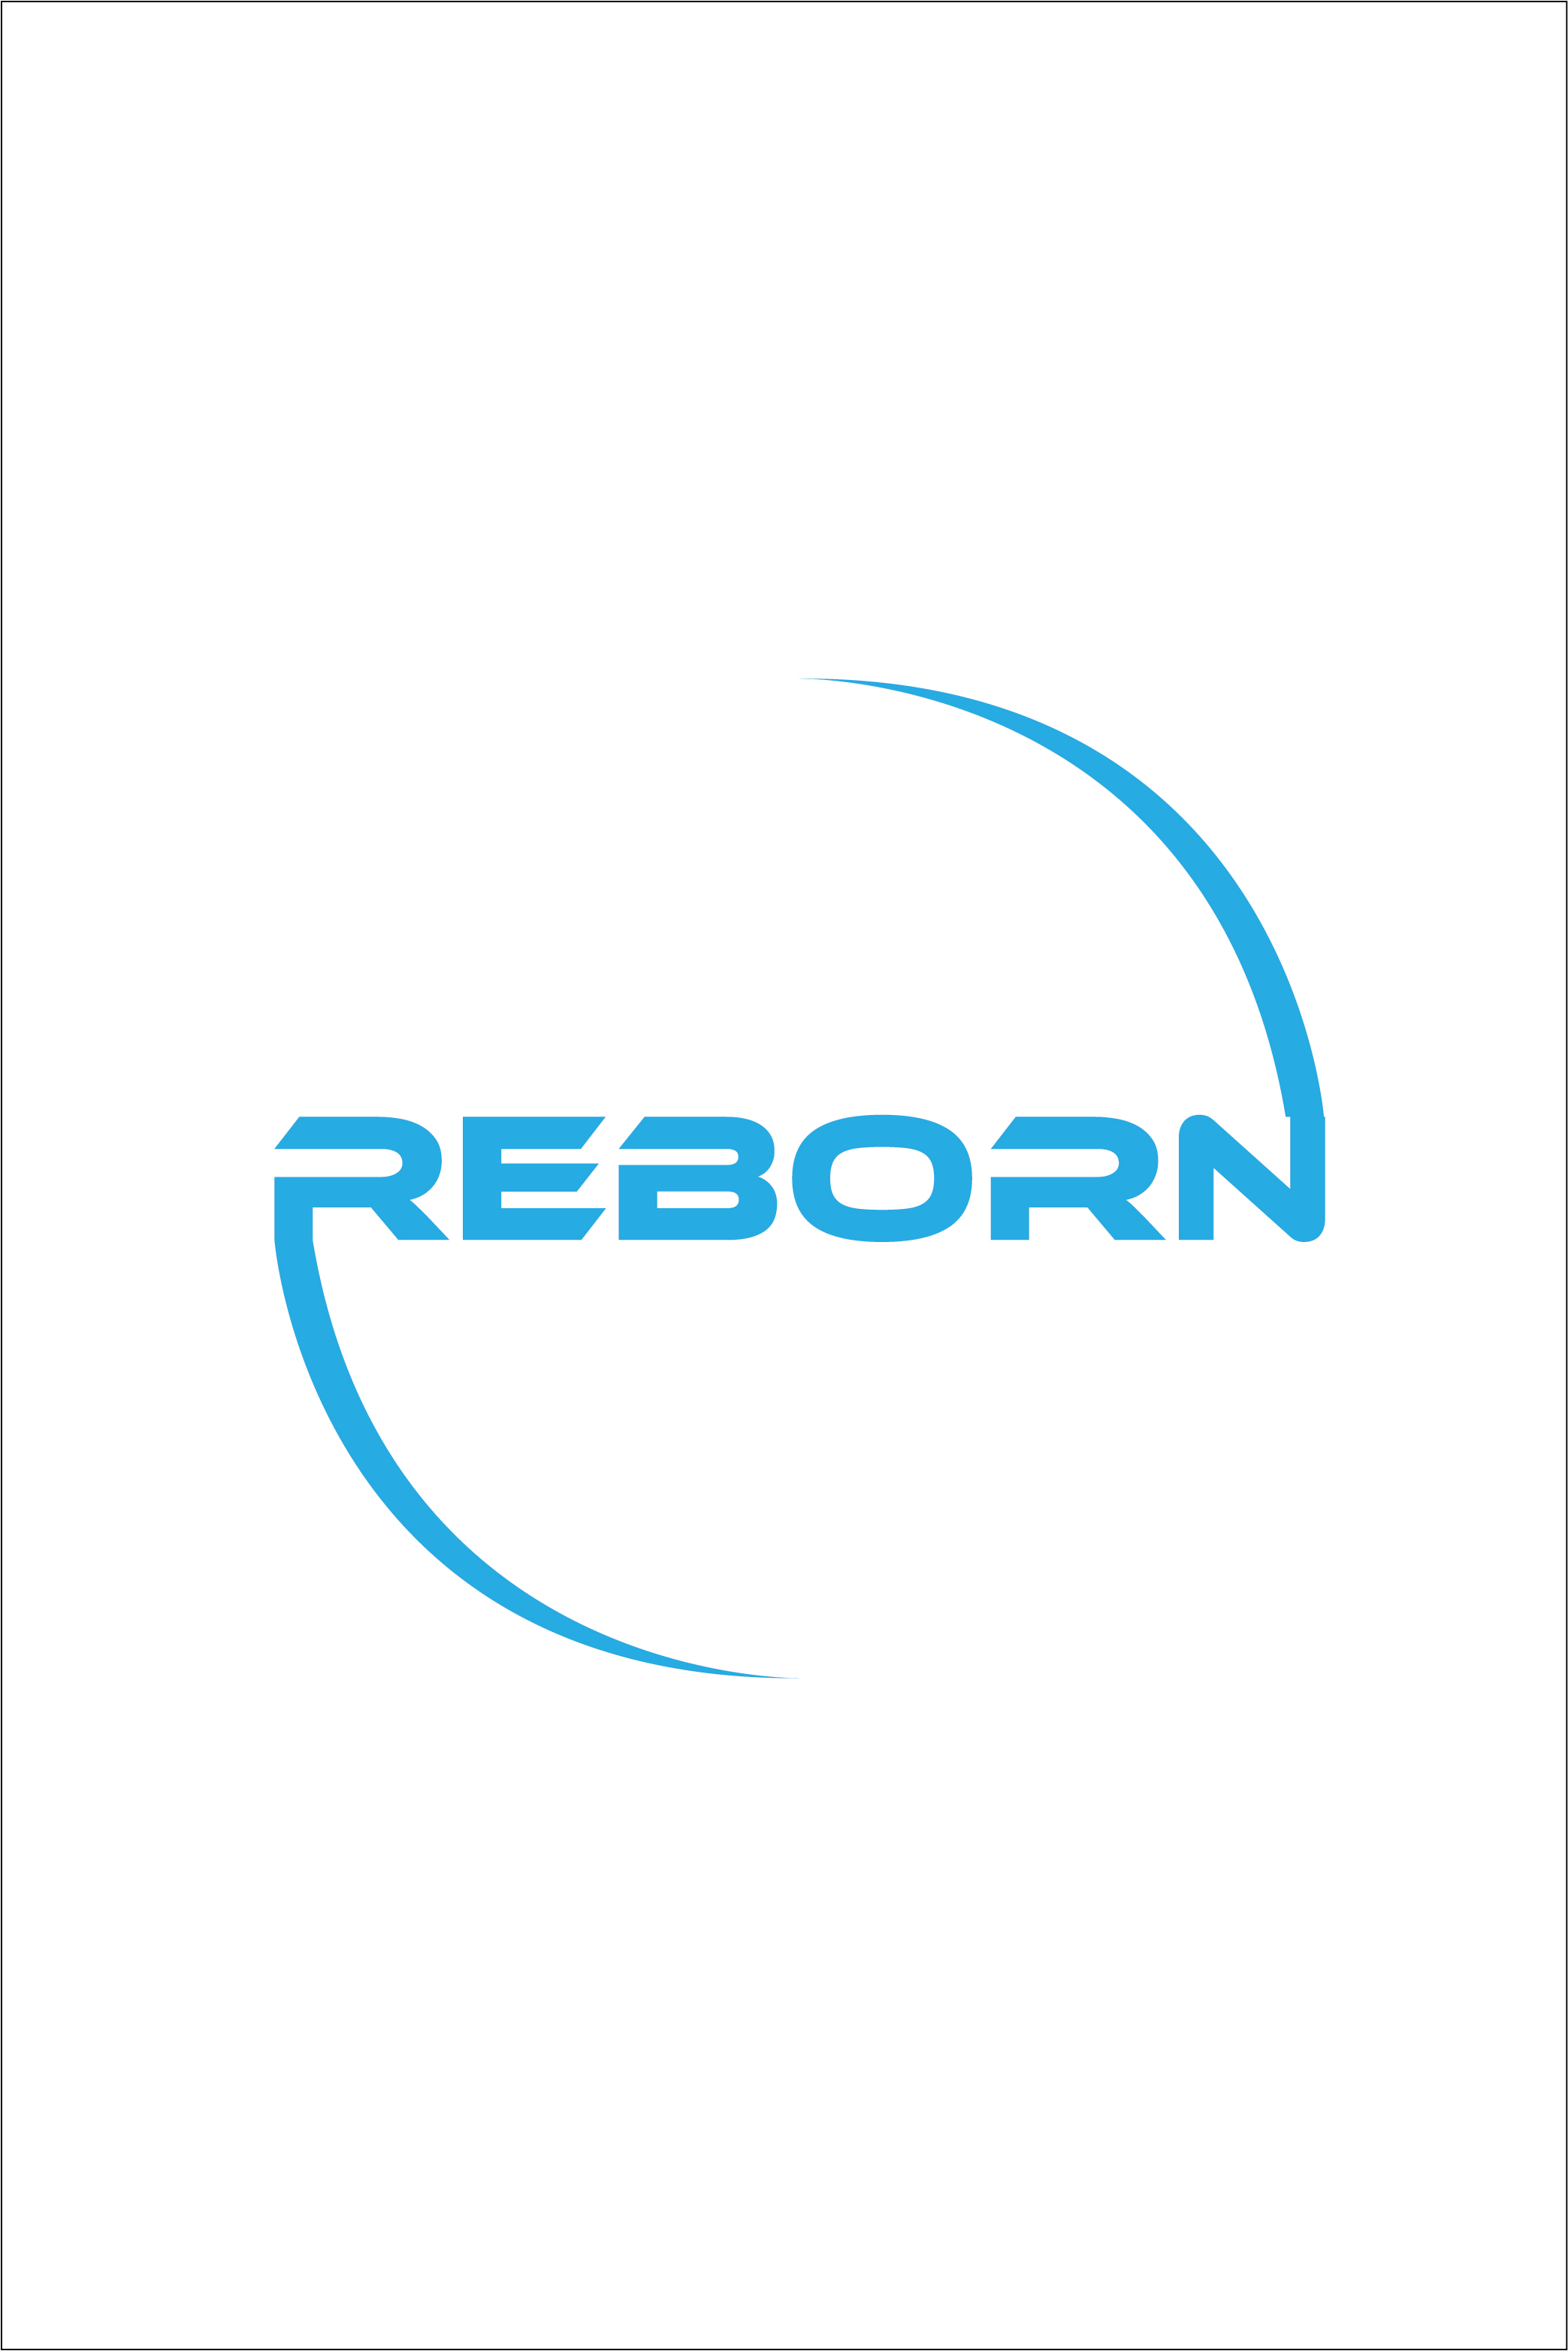 Reborn Logo Design Vector Image Template pinterest preview image.